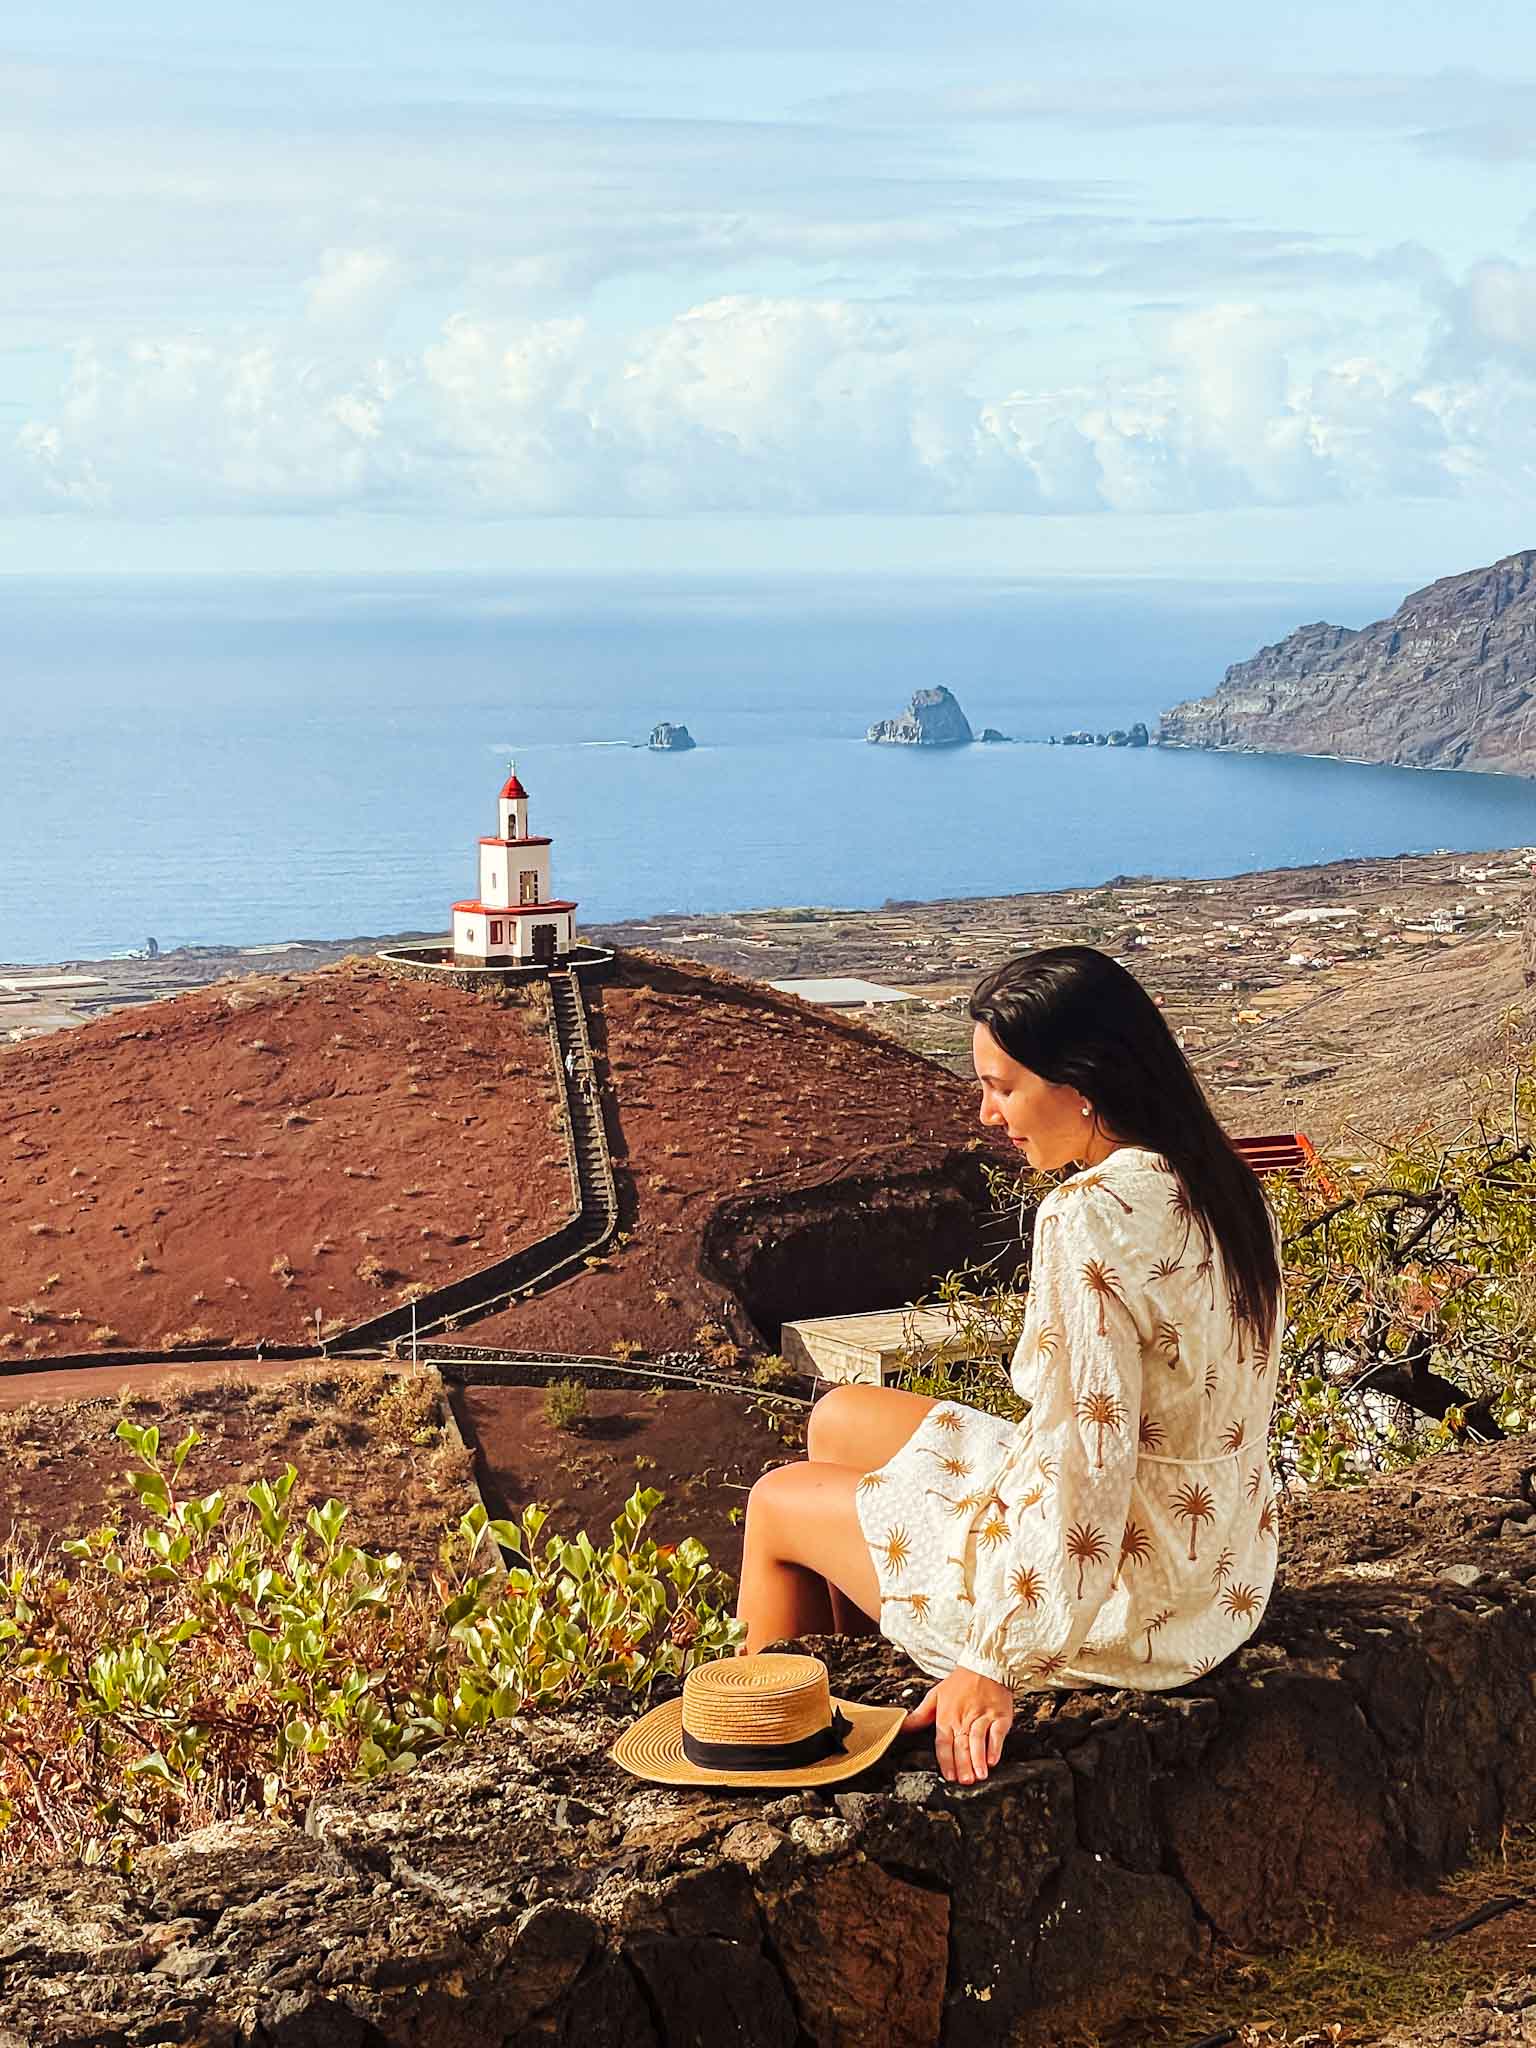 Best Instagram spots in El Hierro Canary Islands - Campanario de Joapira